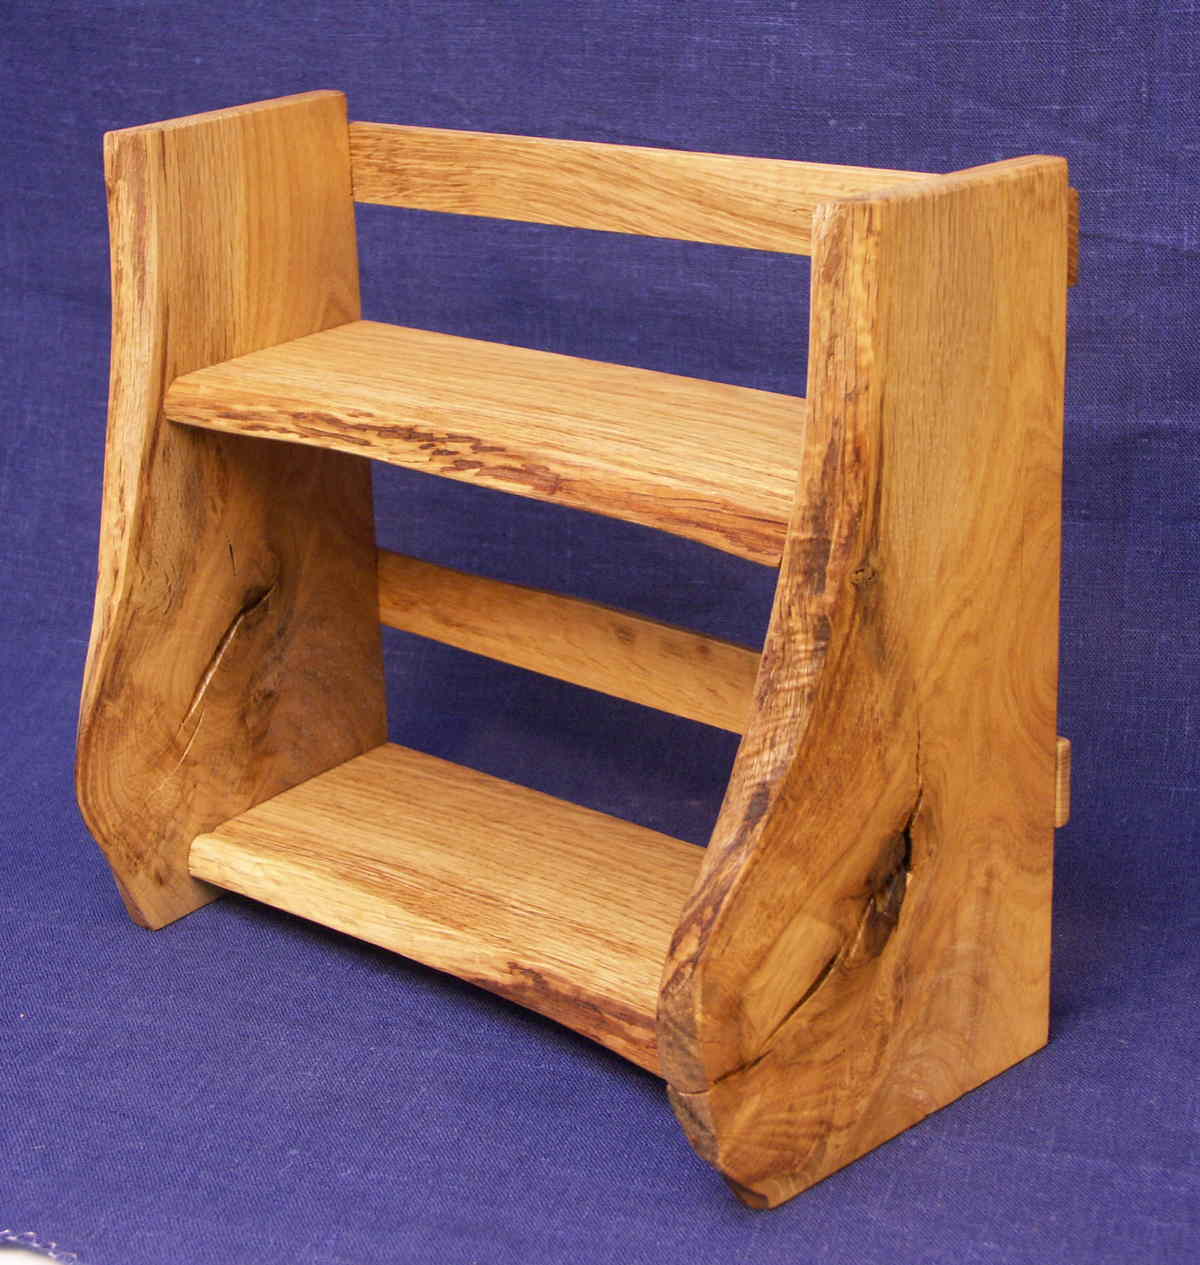 A shelf in oak